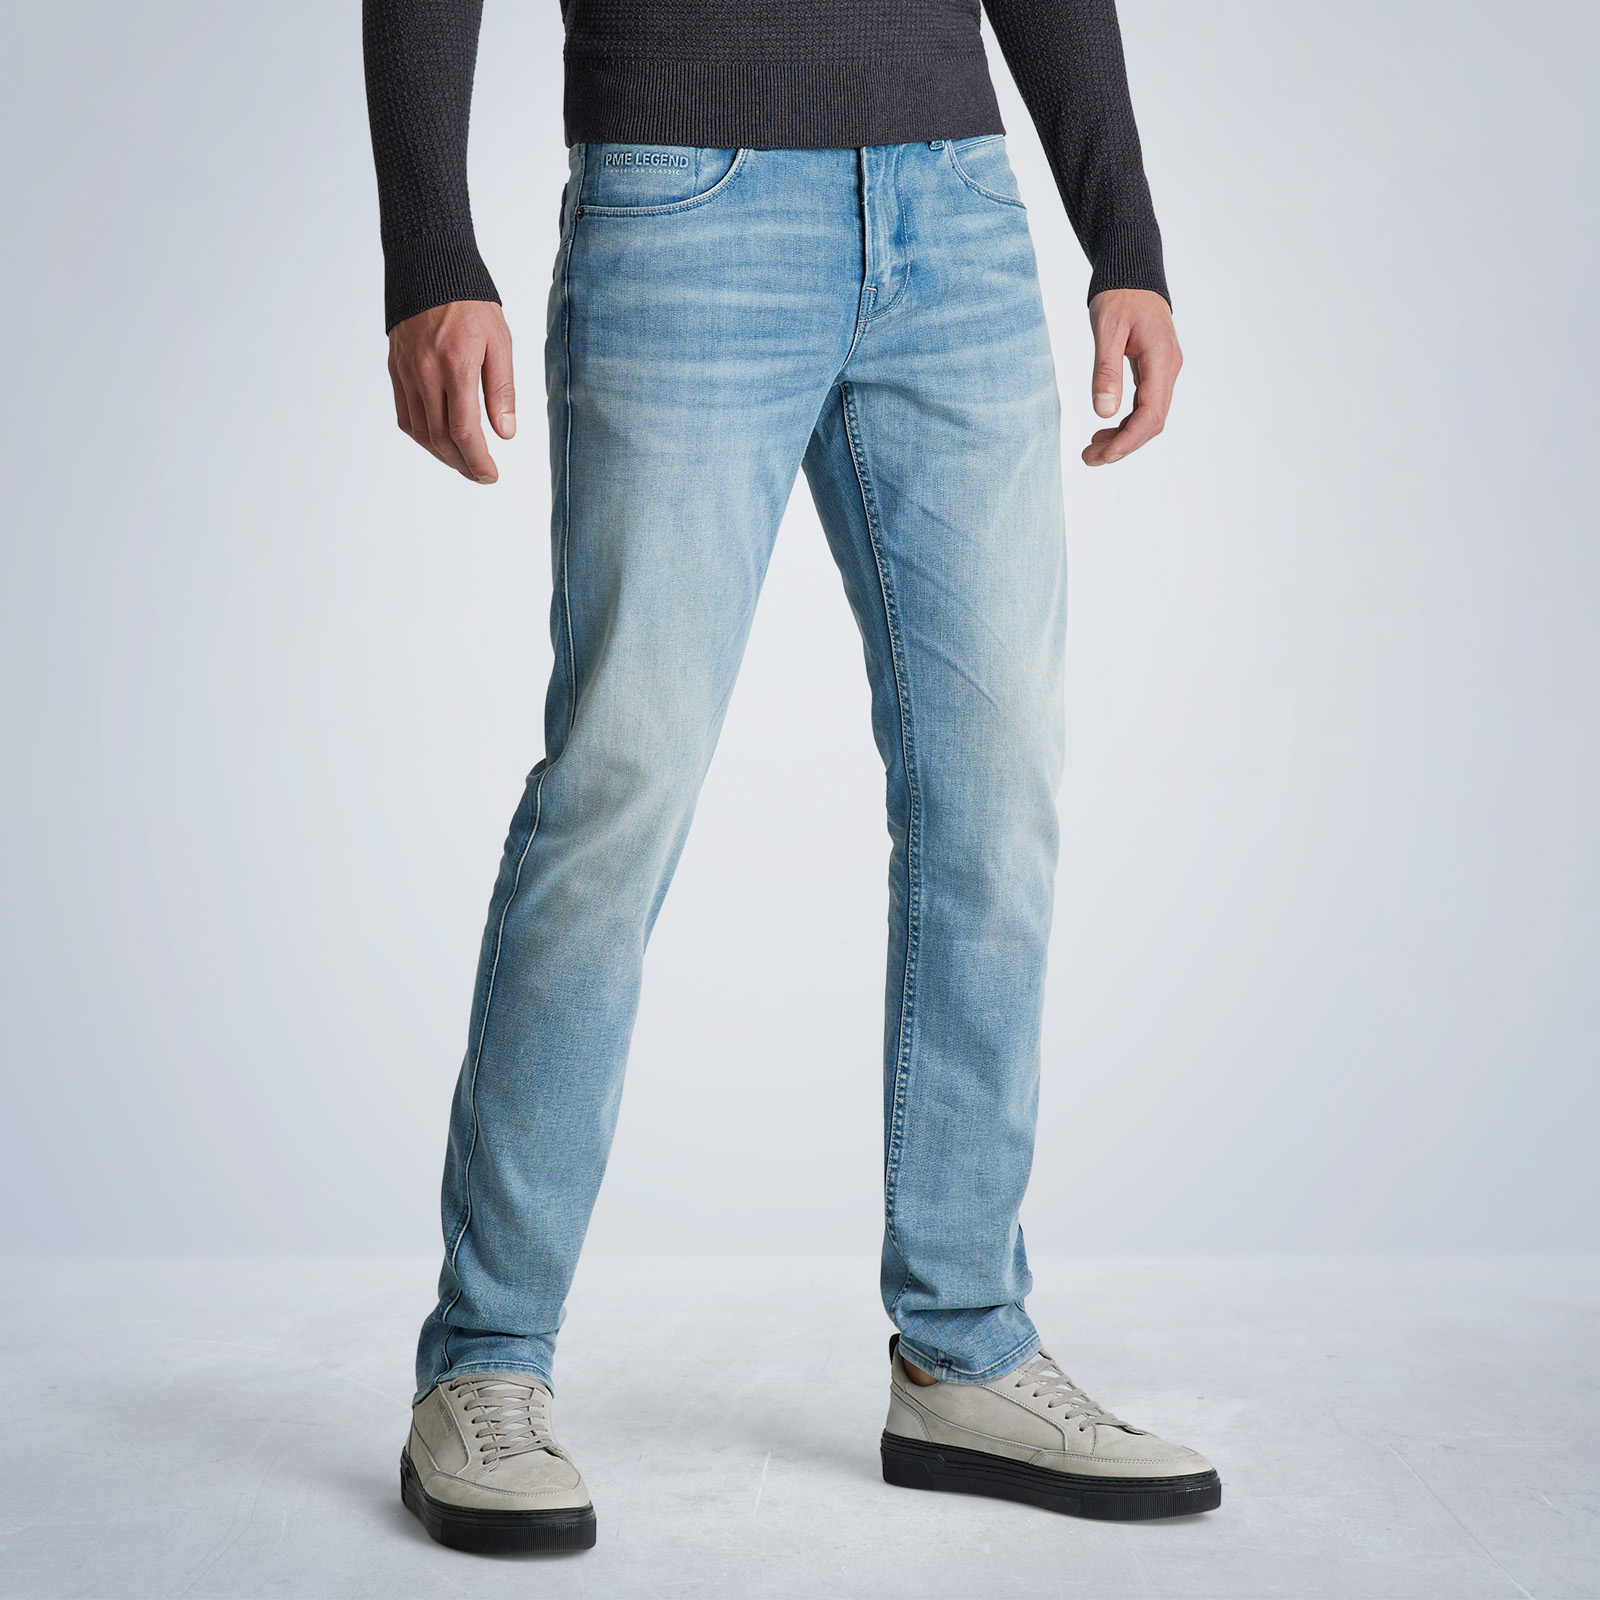 PME JEANS PME Legend Nightflight Jeans | Free shipping